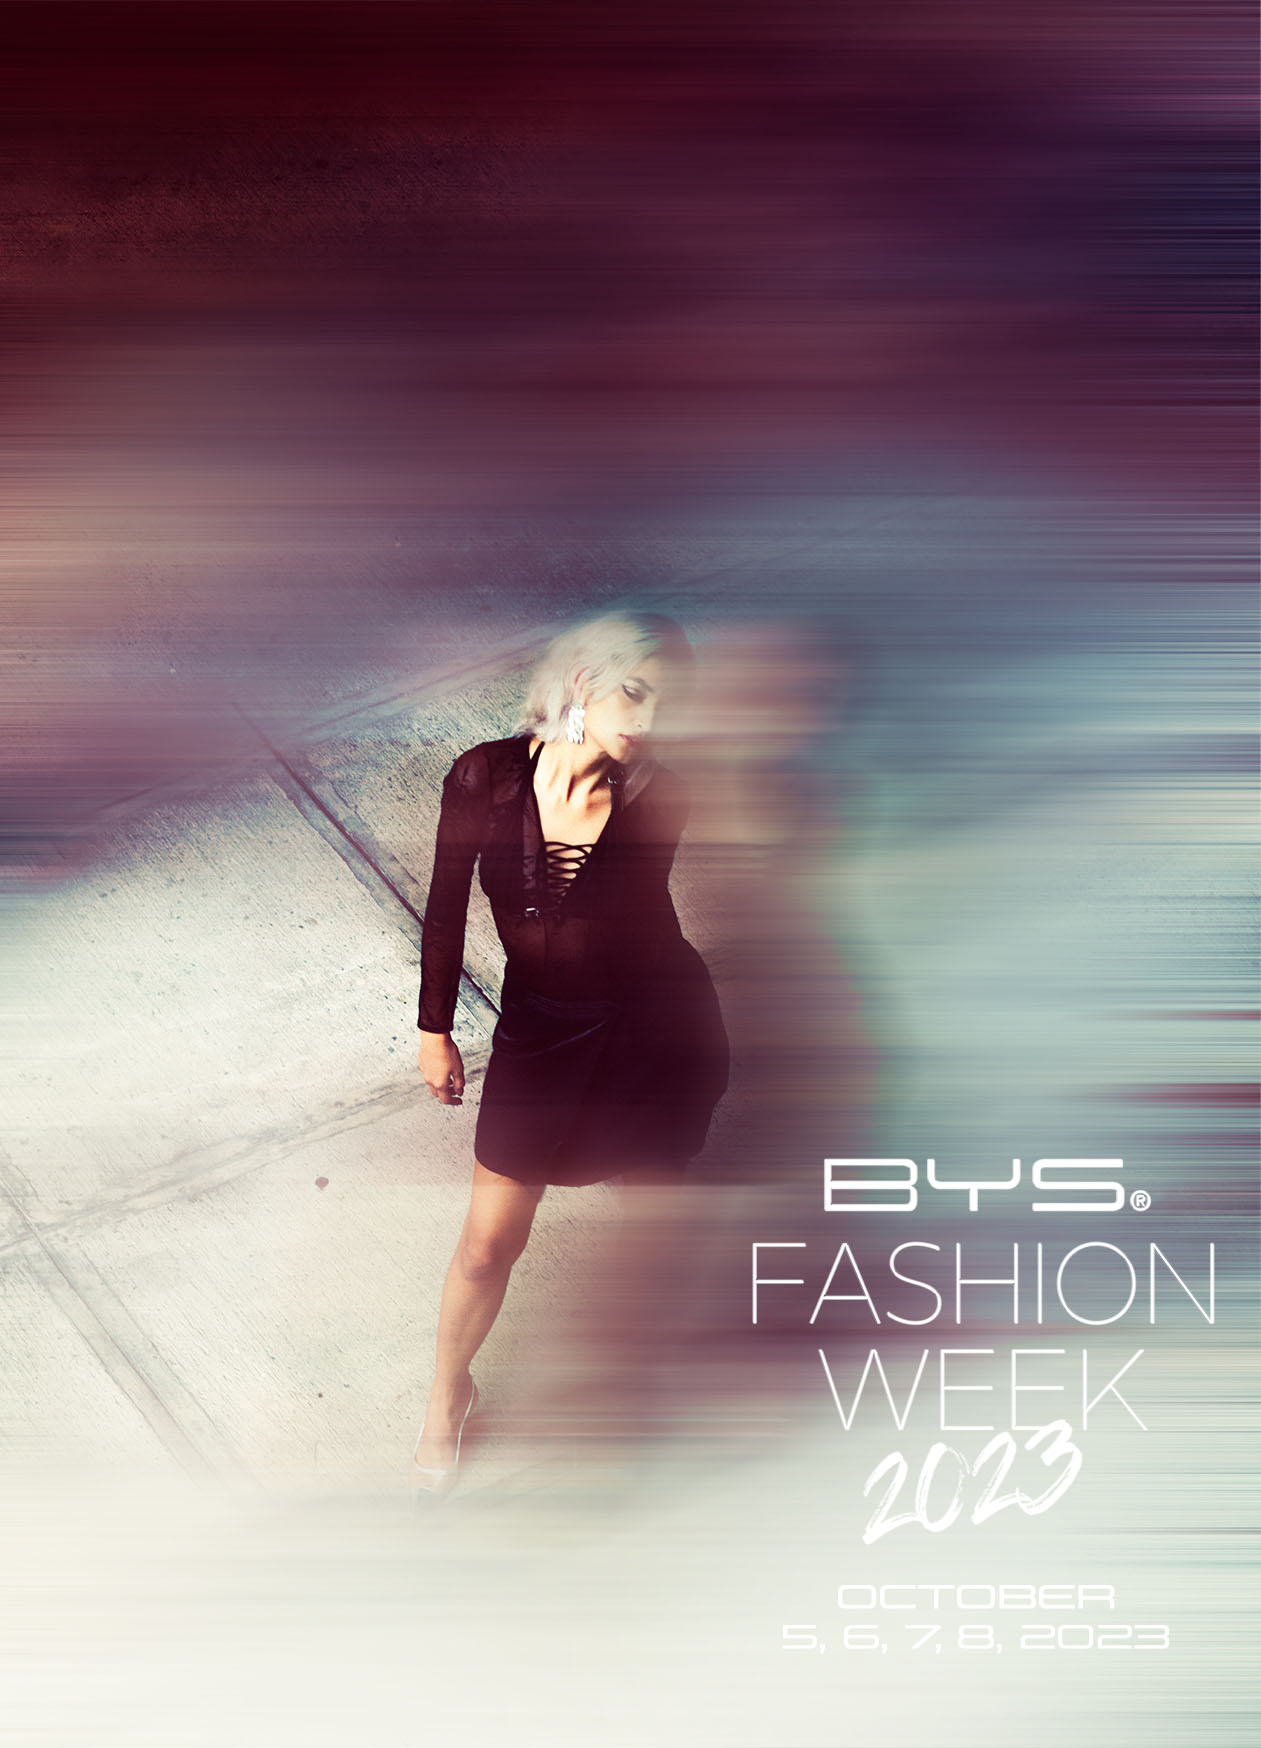 BYS Fashion Week Poster 4